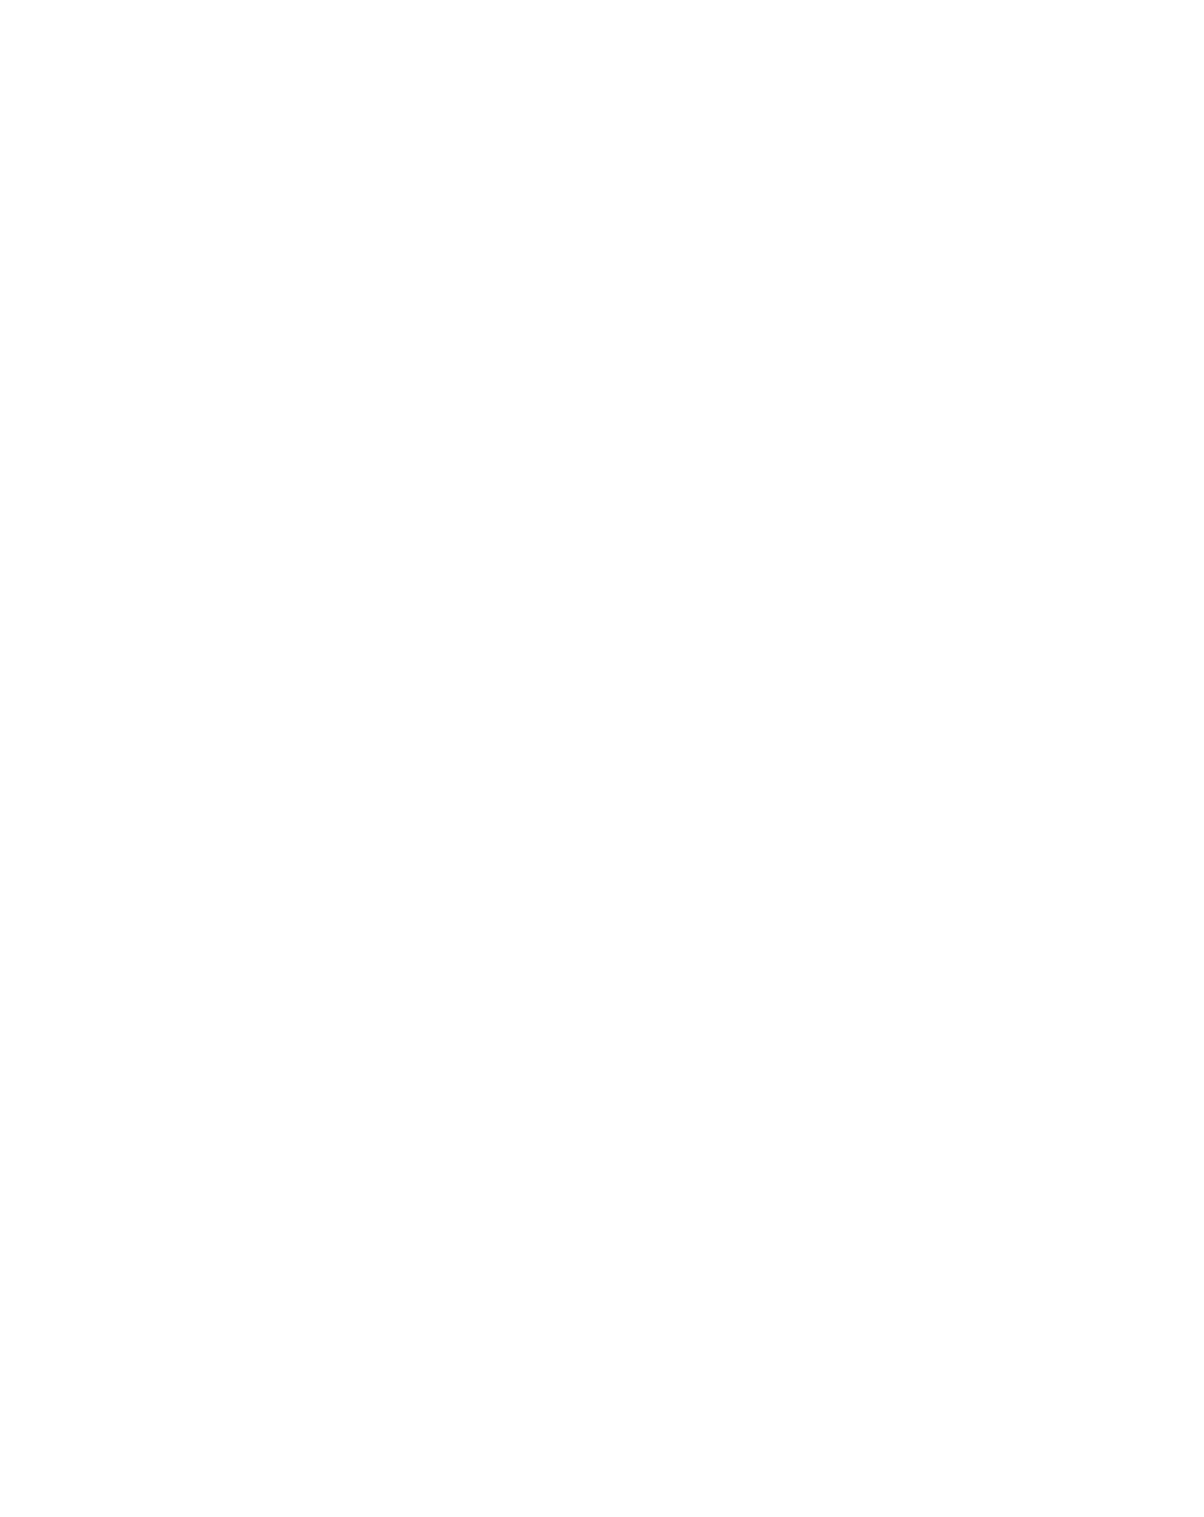 Verbio logo for dark backgrounds (transparent PNG)